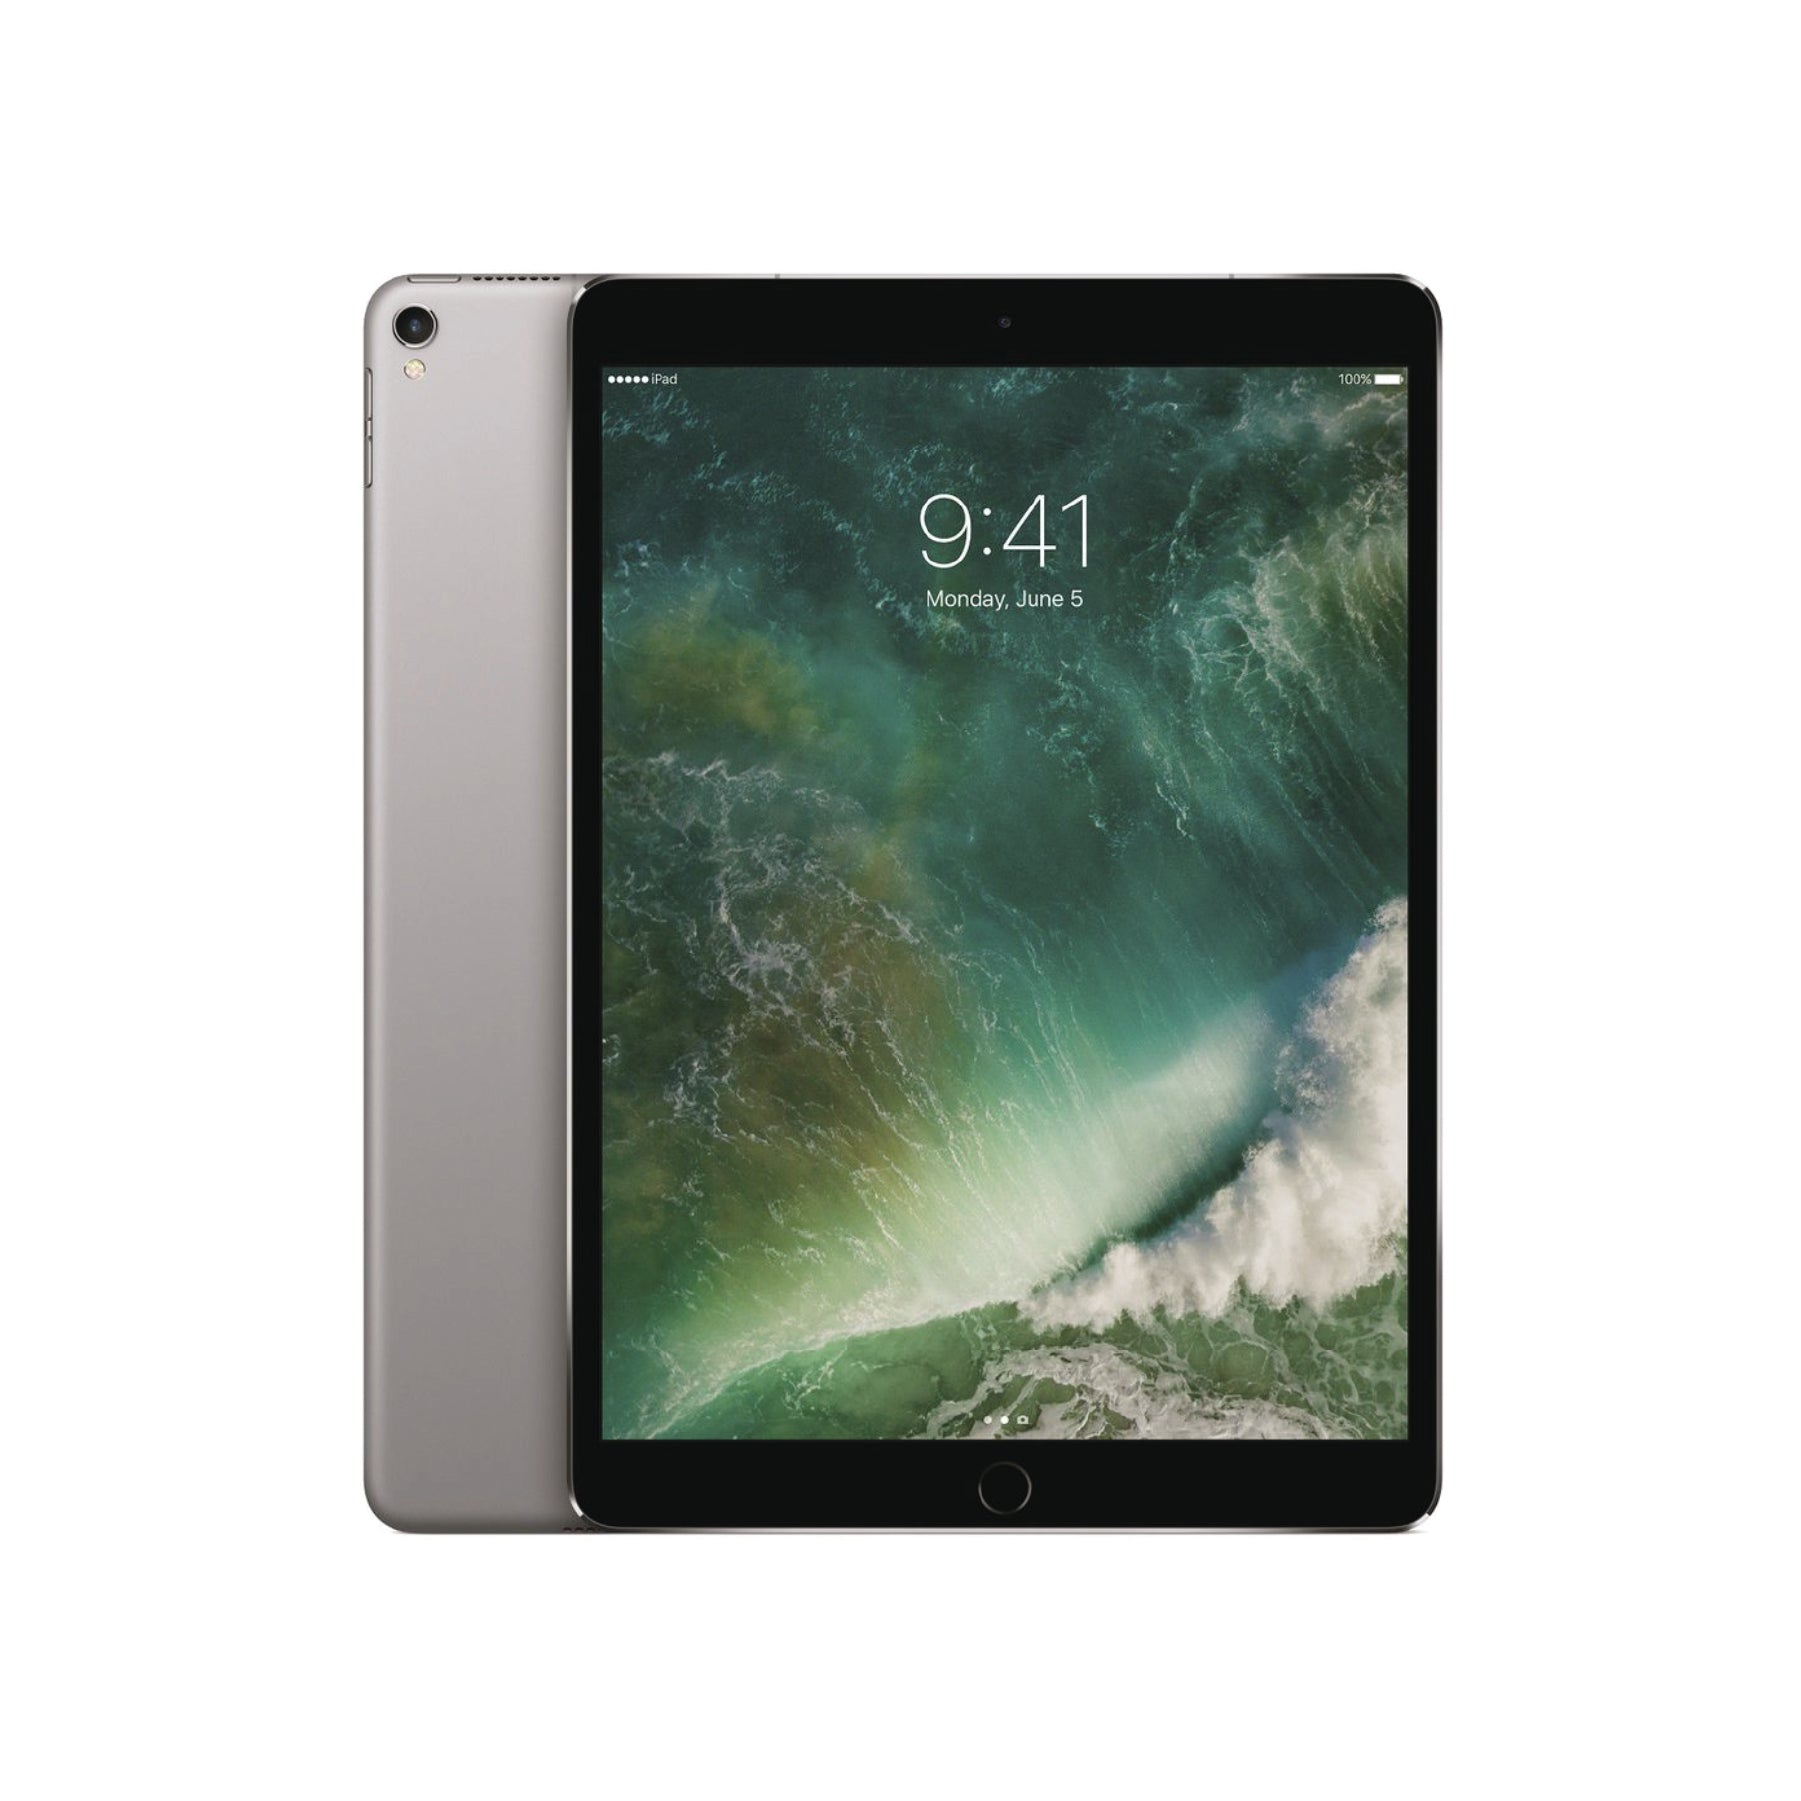 iPad Pro (9.7-inch, 2016) Wi-Fi + Cellular 128GB - Space Grey (Good)